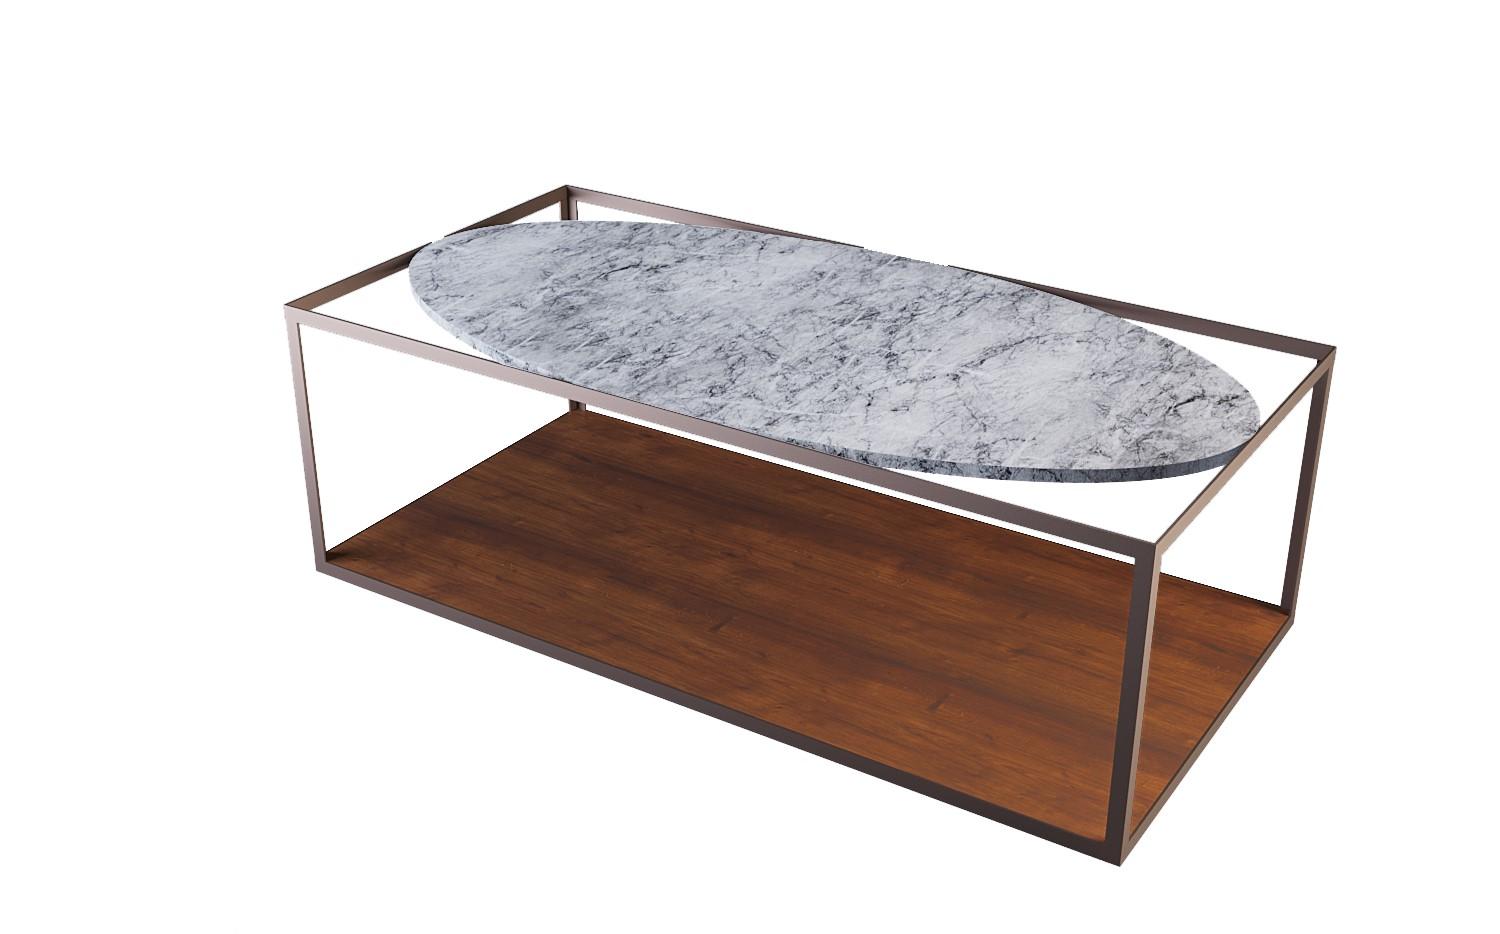 NORDST GAARD Coffee Table, Italian Grey Rain Marble, Danish Modern Design, New For Sale